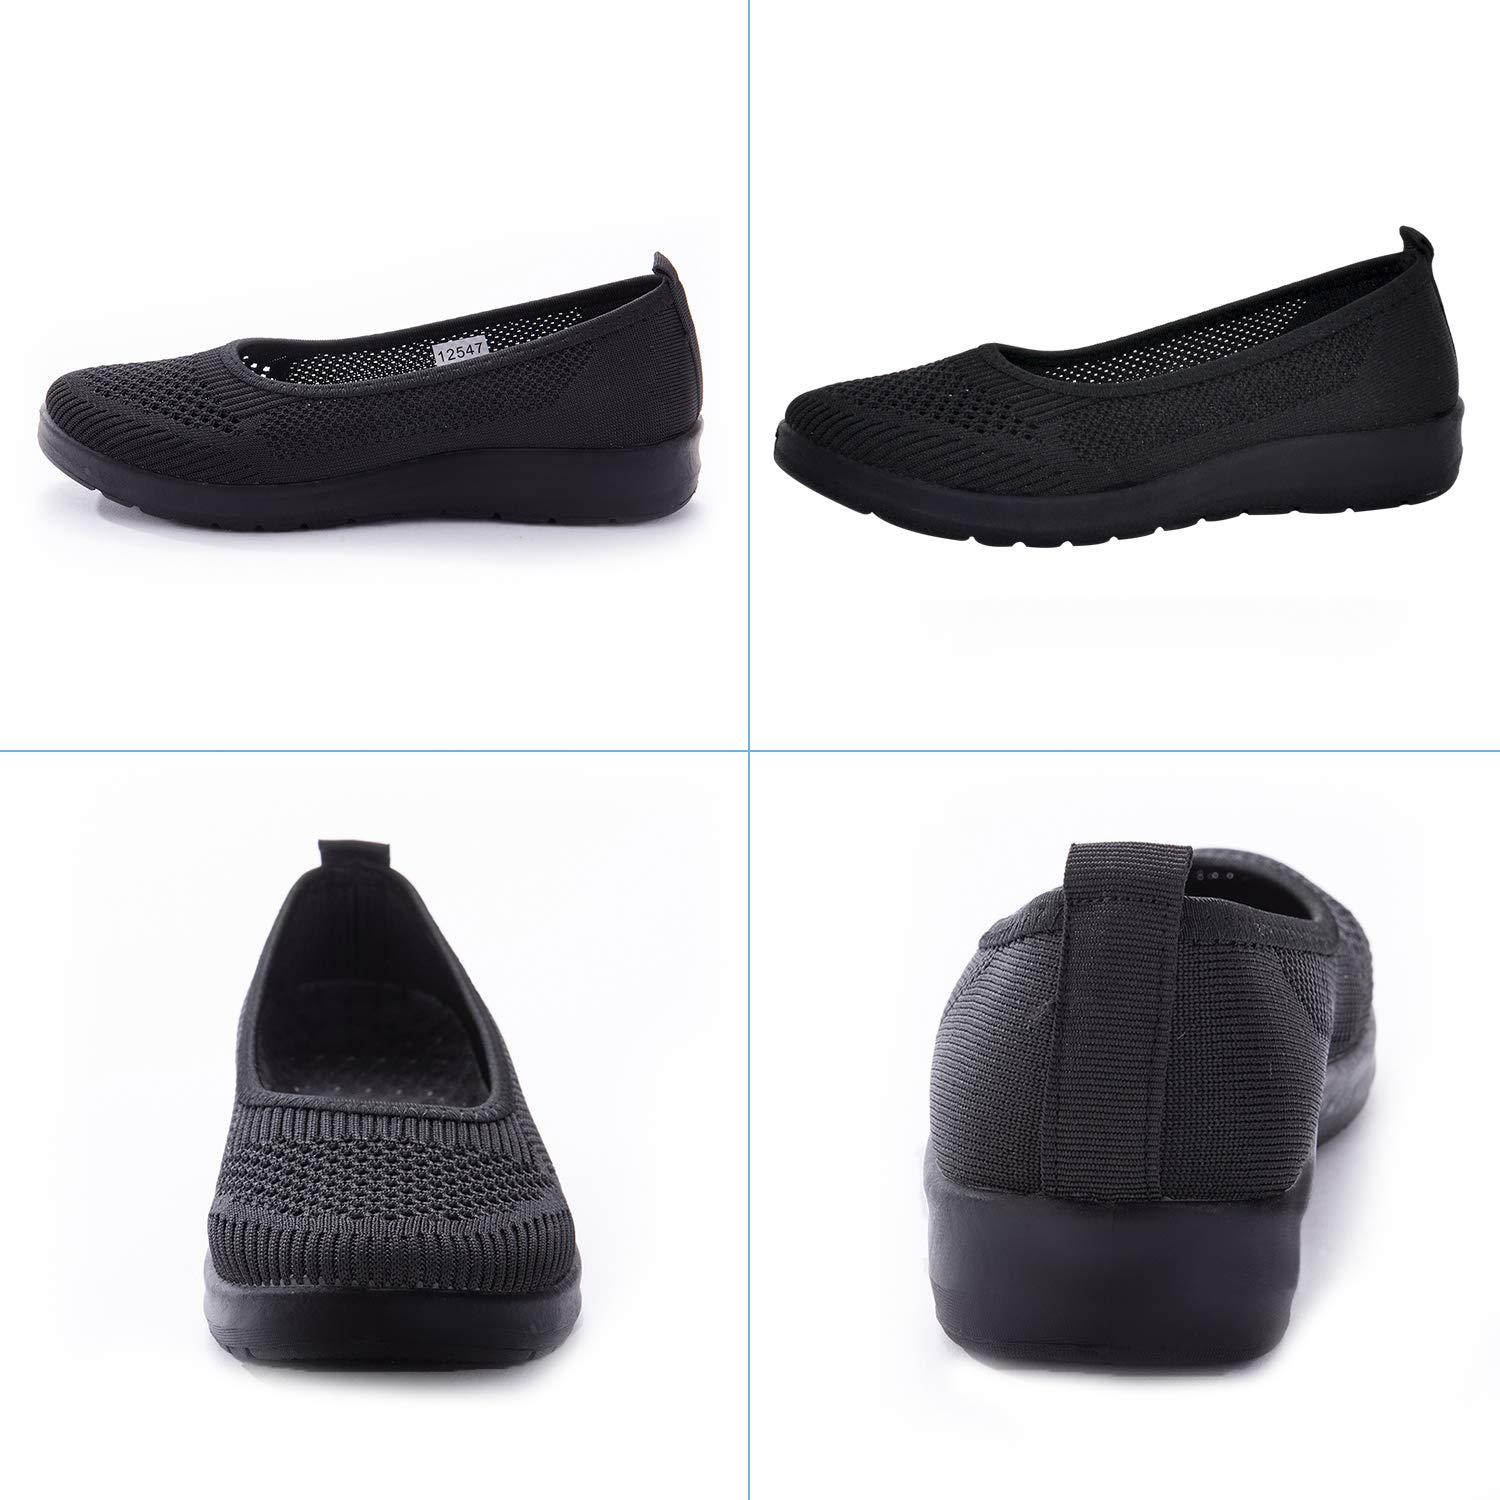 adeilisa Walking Shoes Women Slip On Sneakers Comfortable Breathable Knit Flats,Black 8